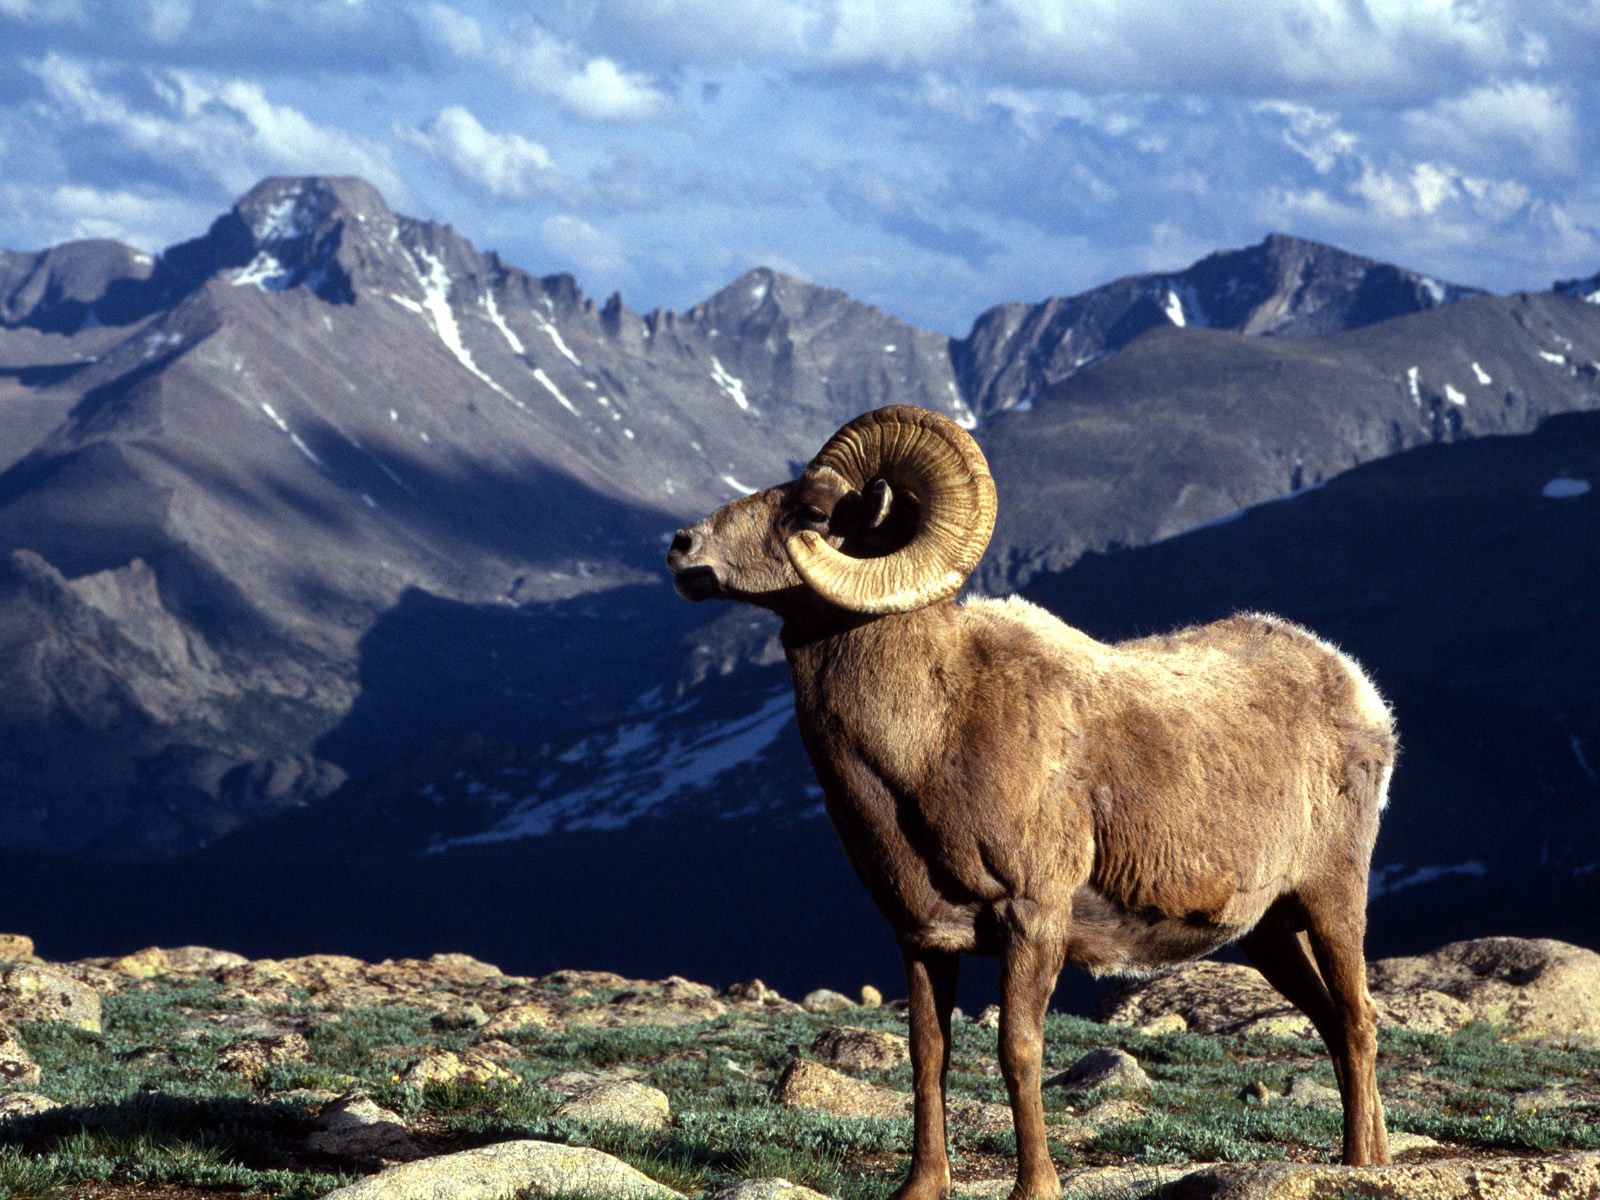 HD Wallpapers Big Horn Ram Rocky Mountain National Park Colorado